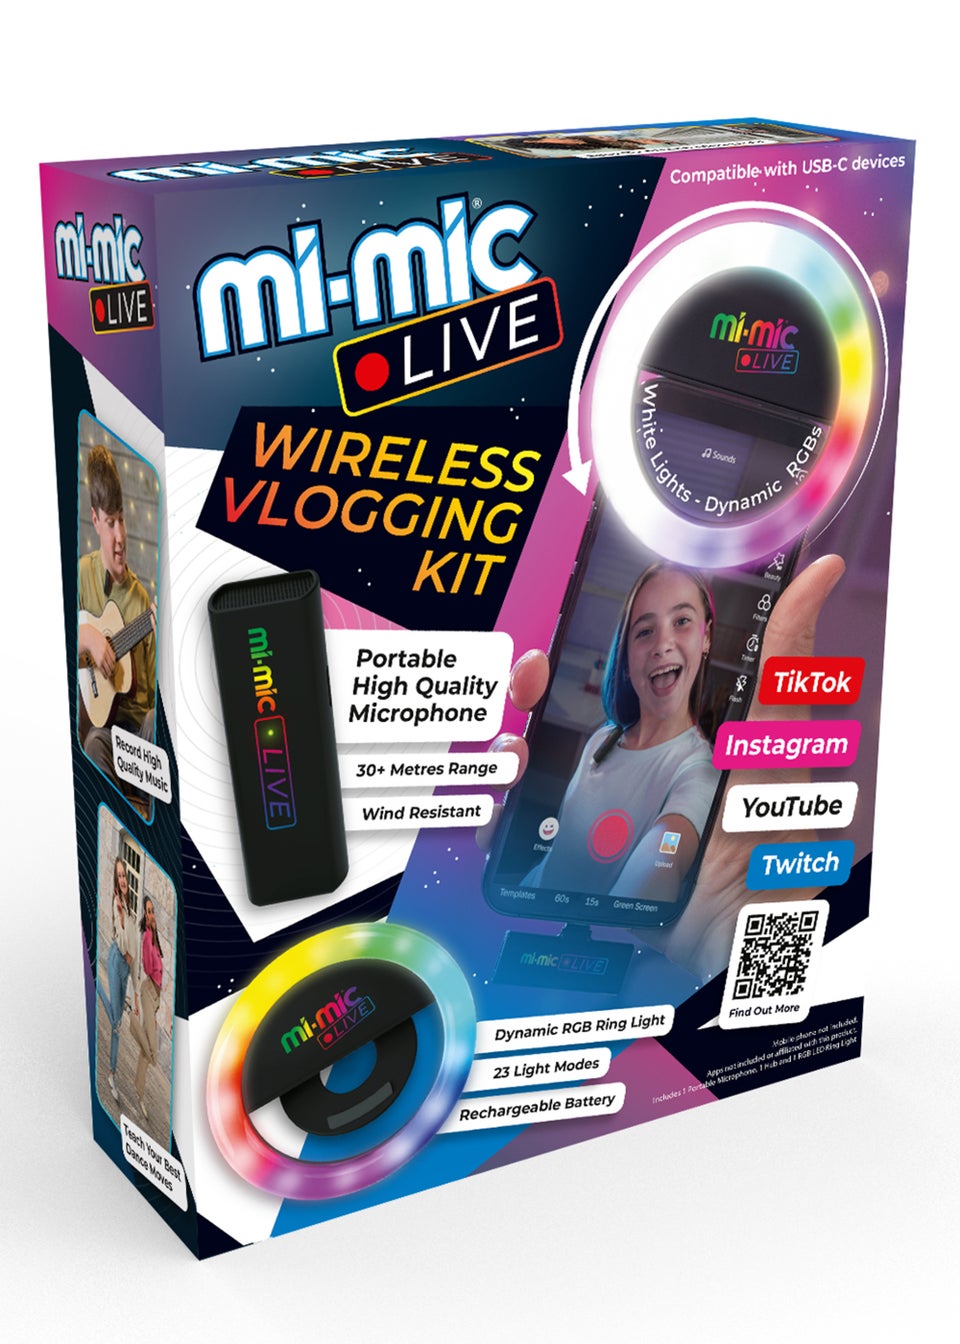 Mi-Mic Live Wireless Vlogging Set - Android